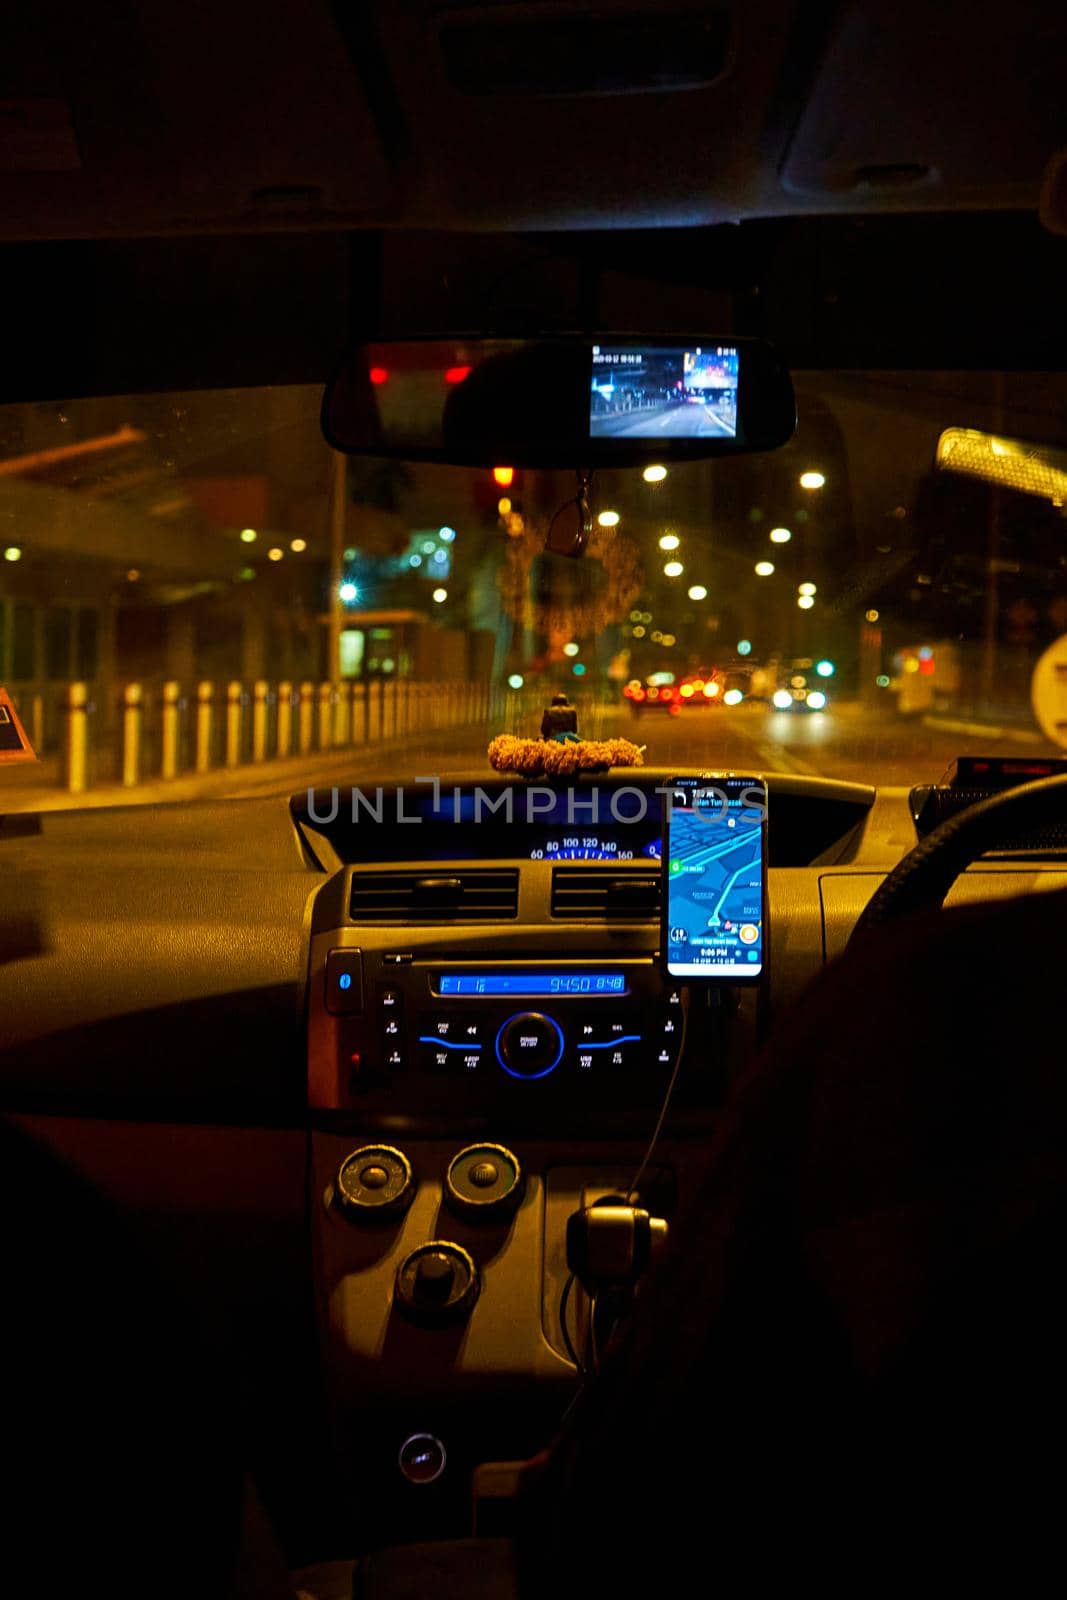 interior of a car driving night rainy city. blurred city lights. Kuala Lumpur, Malaysia - 03.12.2020